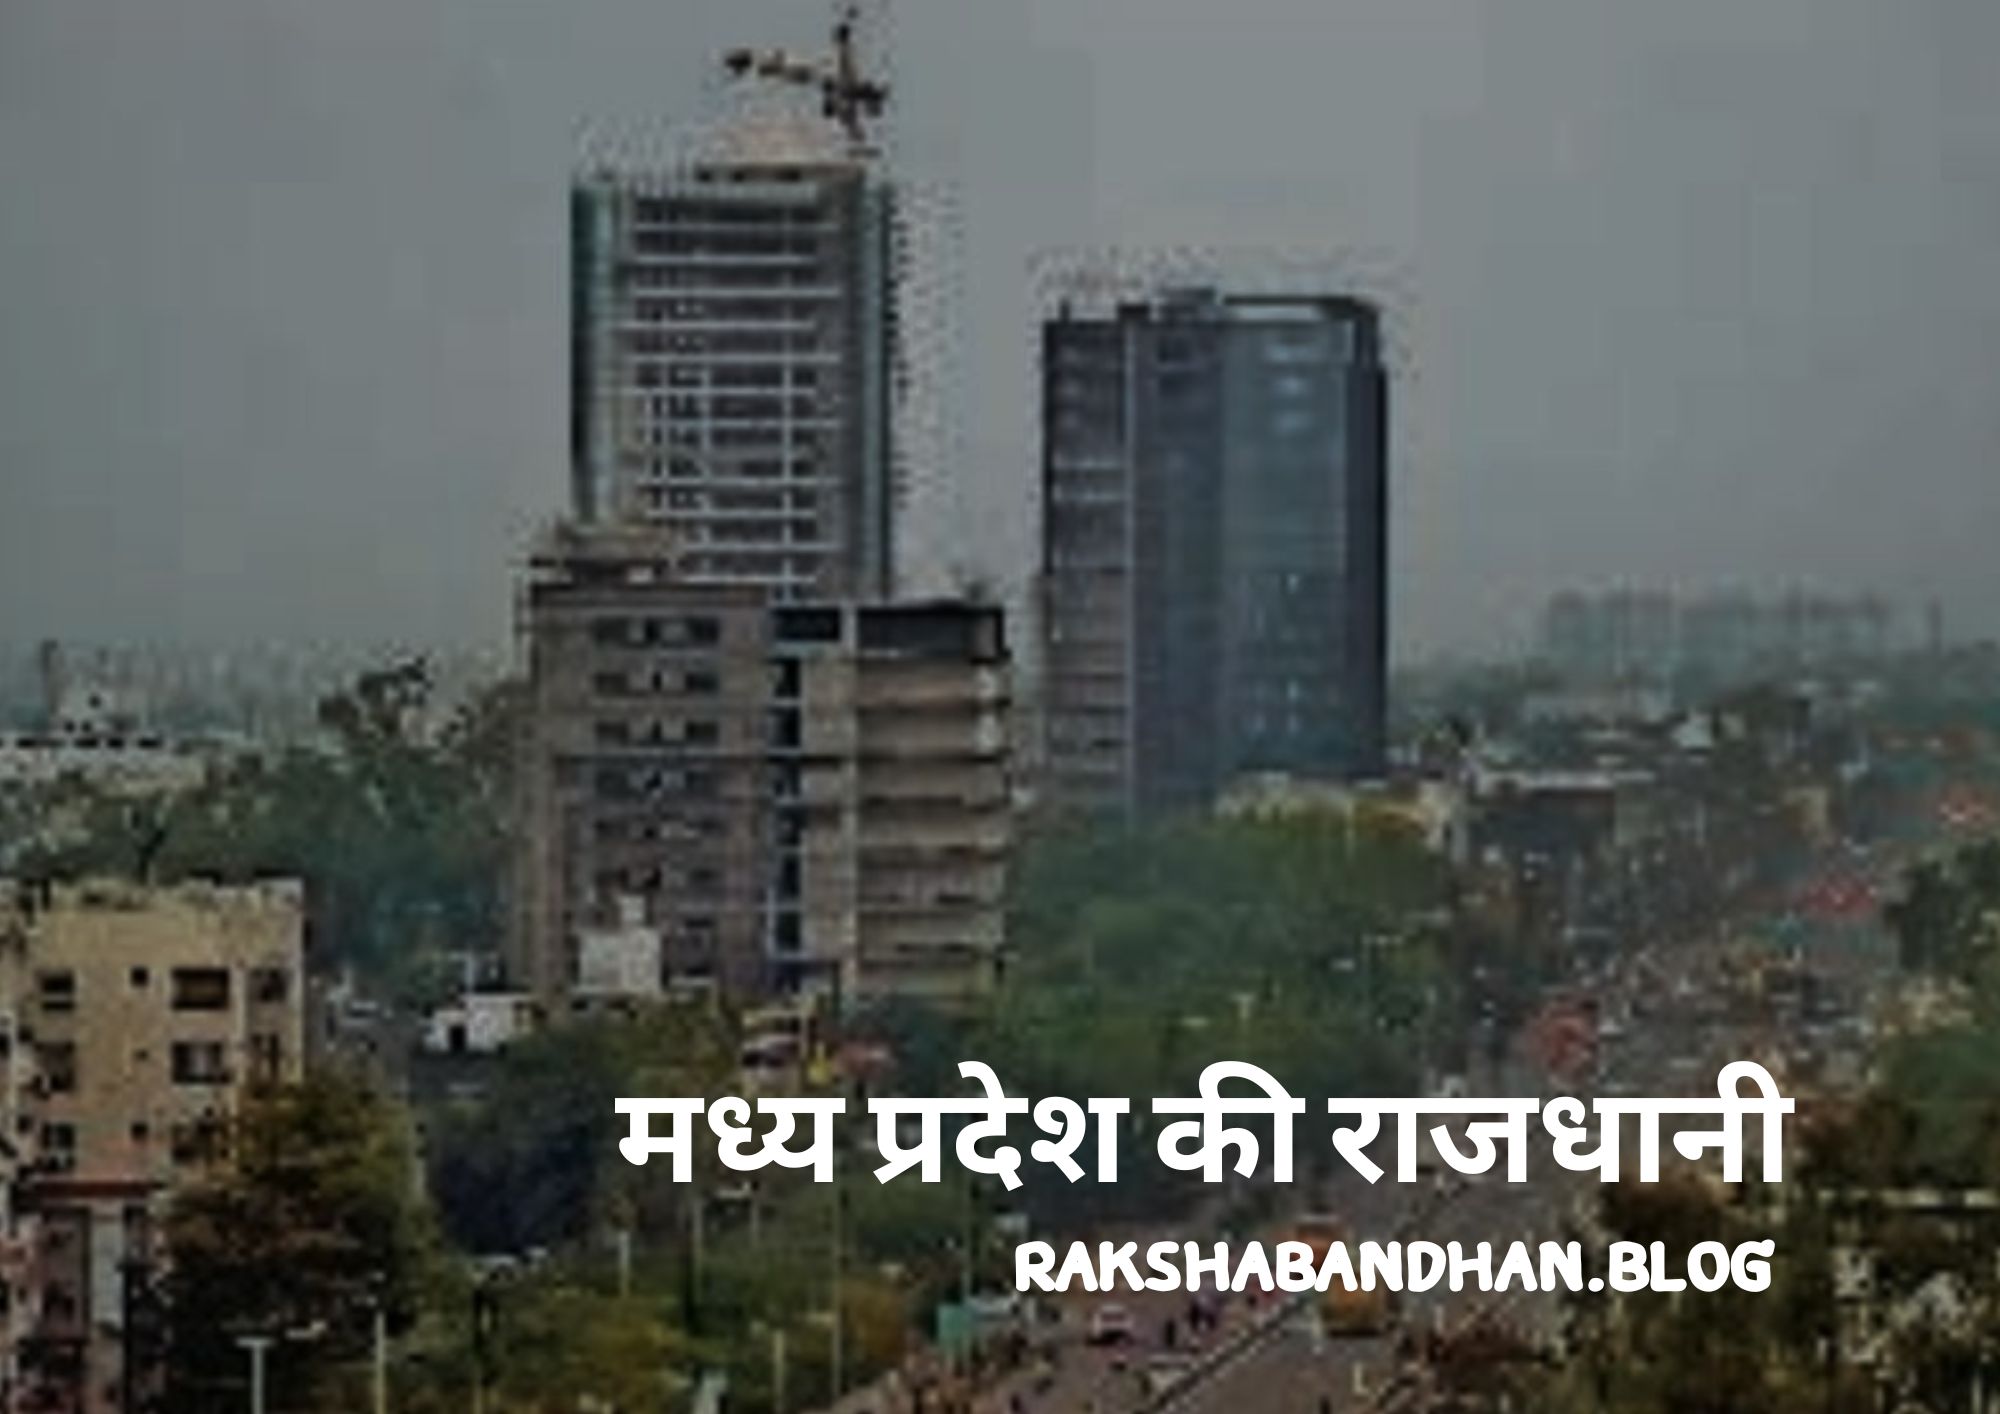 Madhya Pradesh Ki Rajdhani Kya Hai - मध्य प्रदेश की राजधानी कहां है